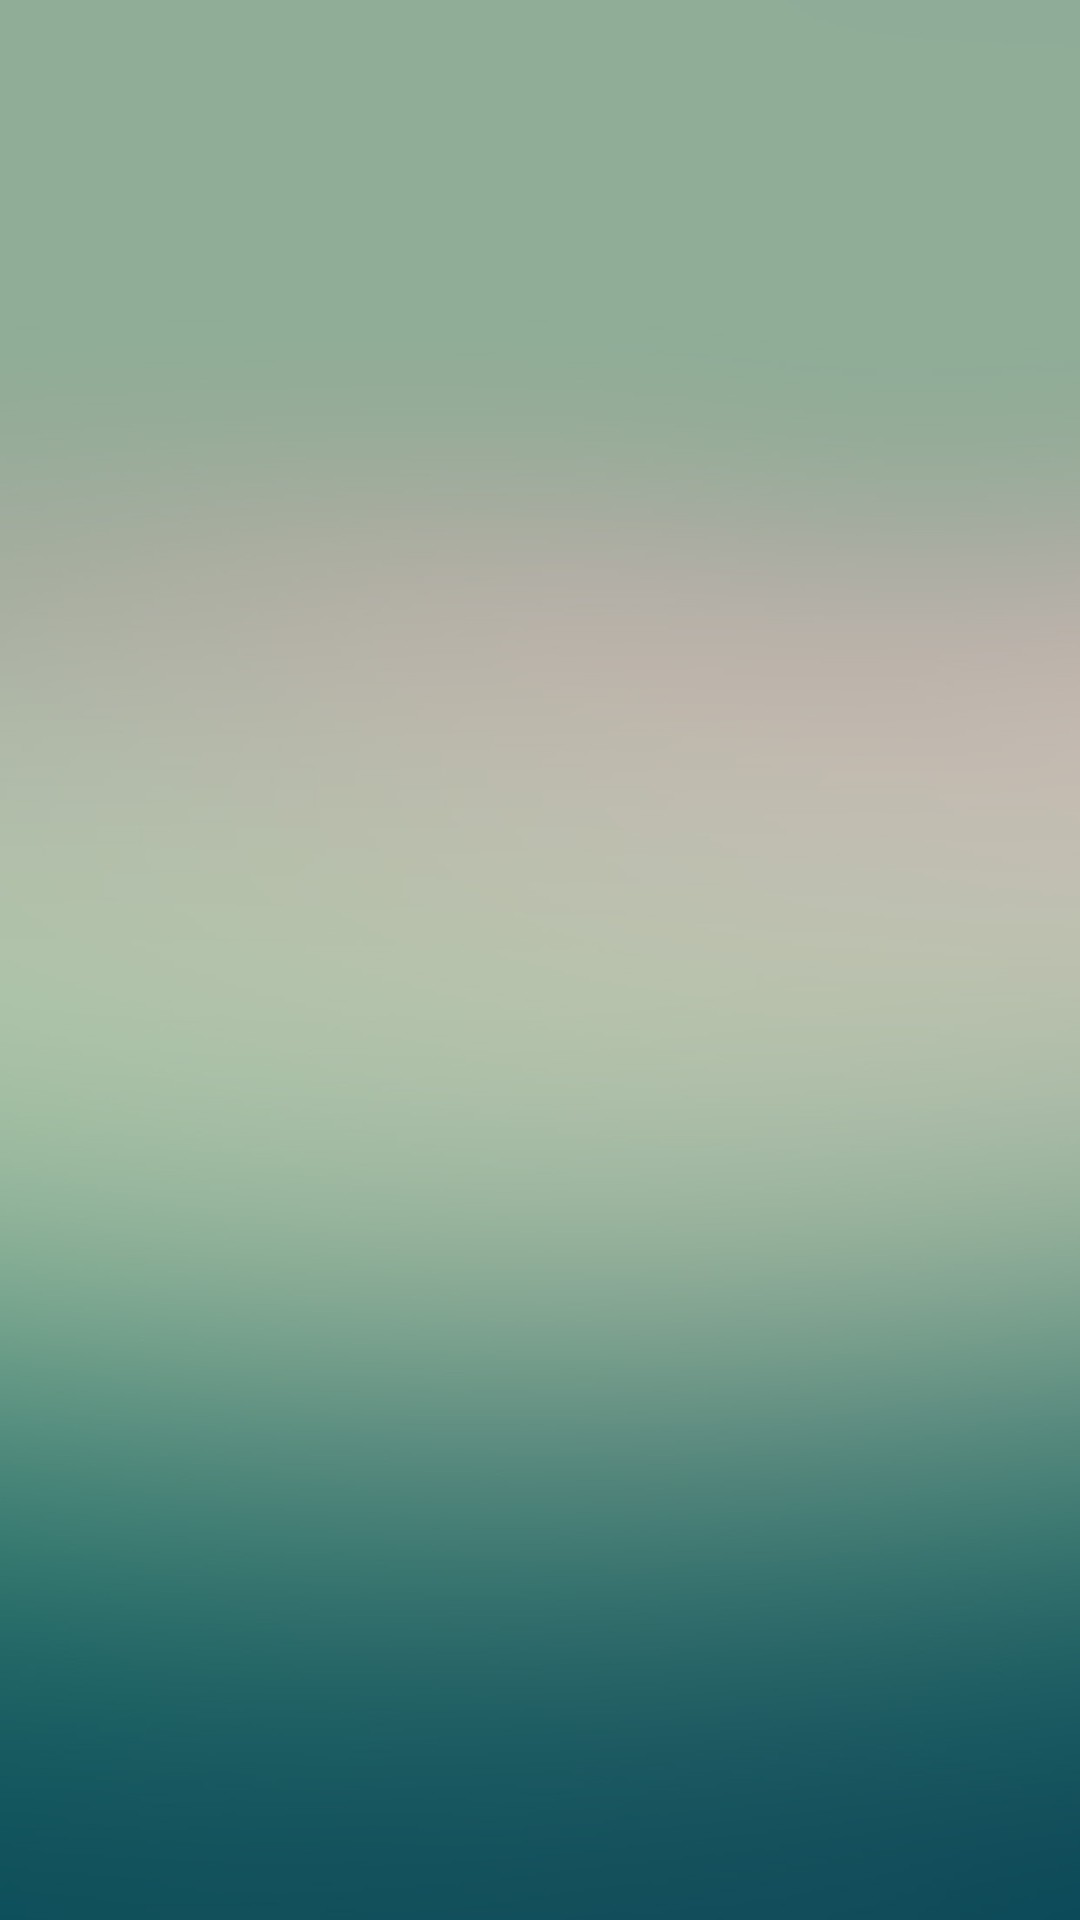 1080x1920 Green Alive Gradation Blur iPhone 6 wallpaper